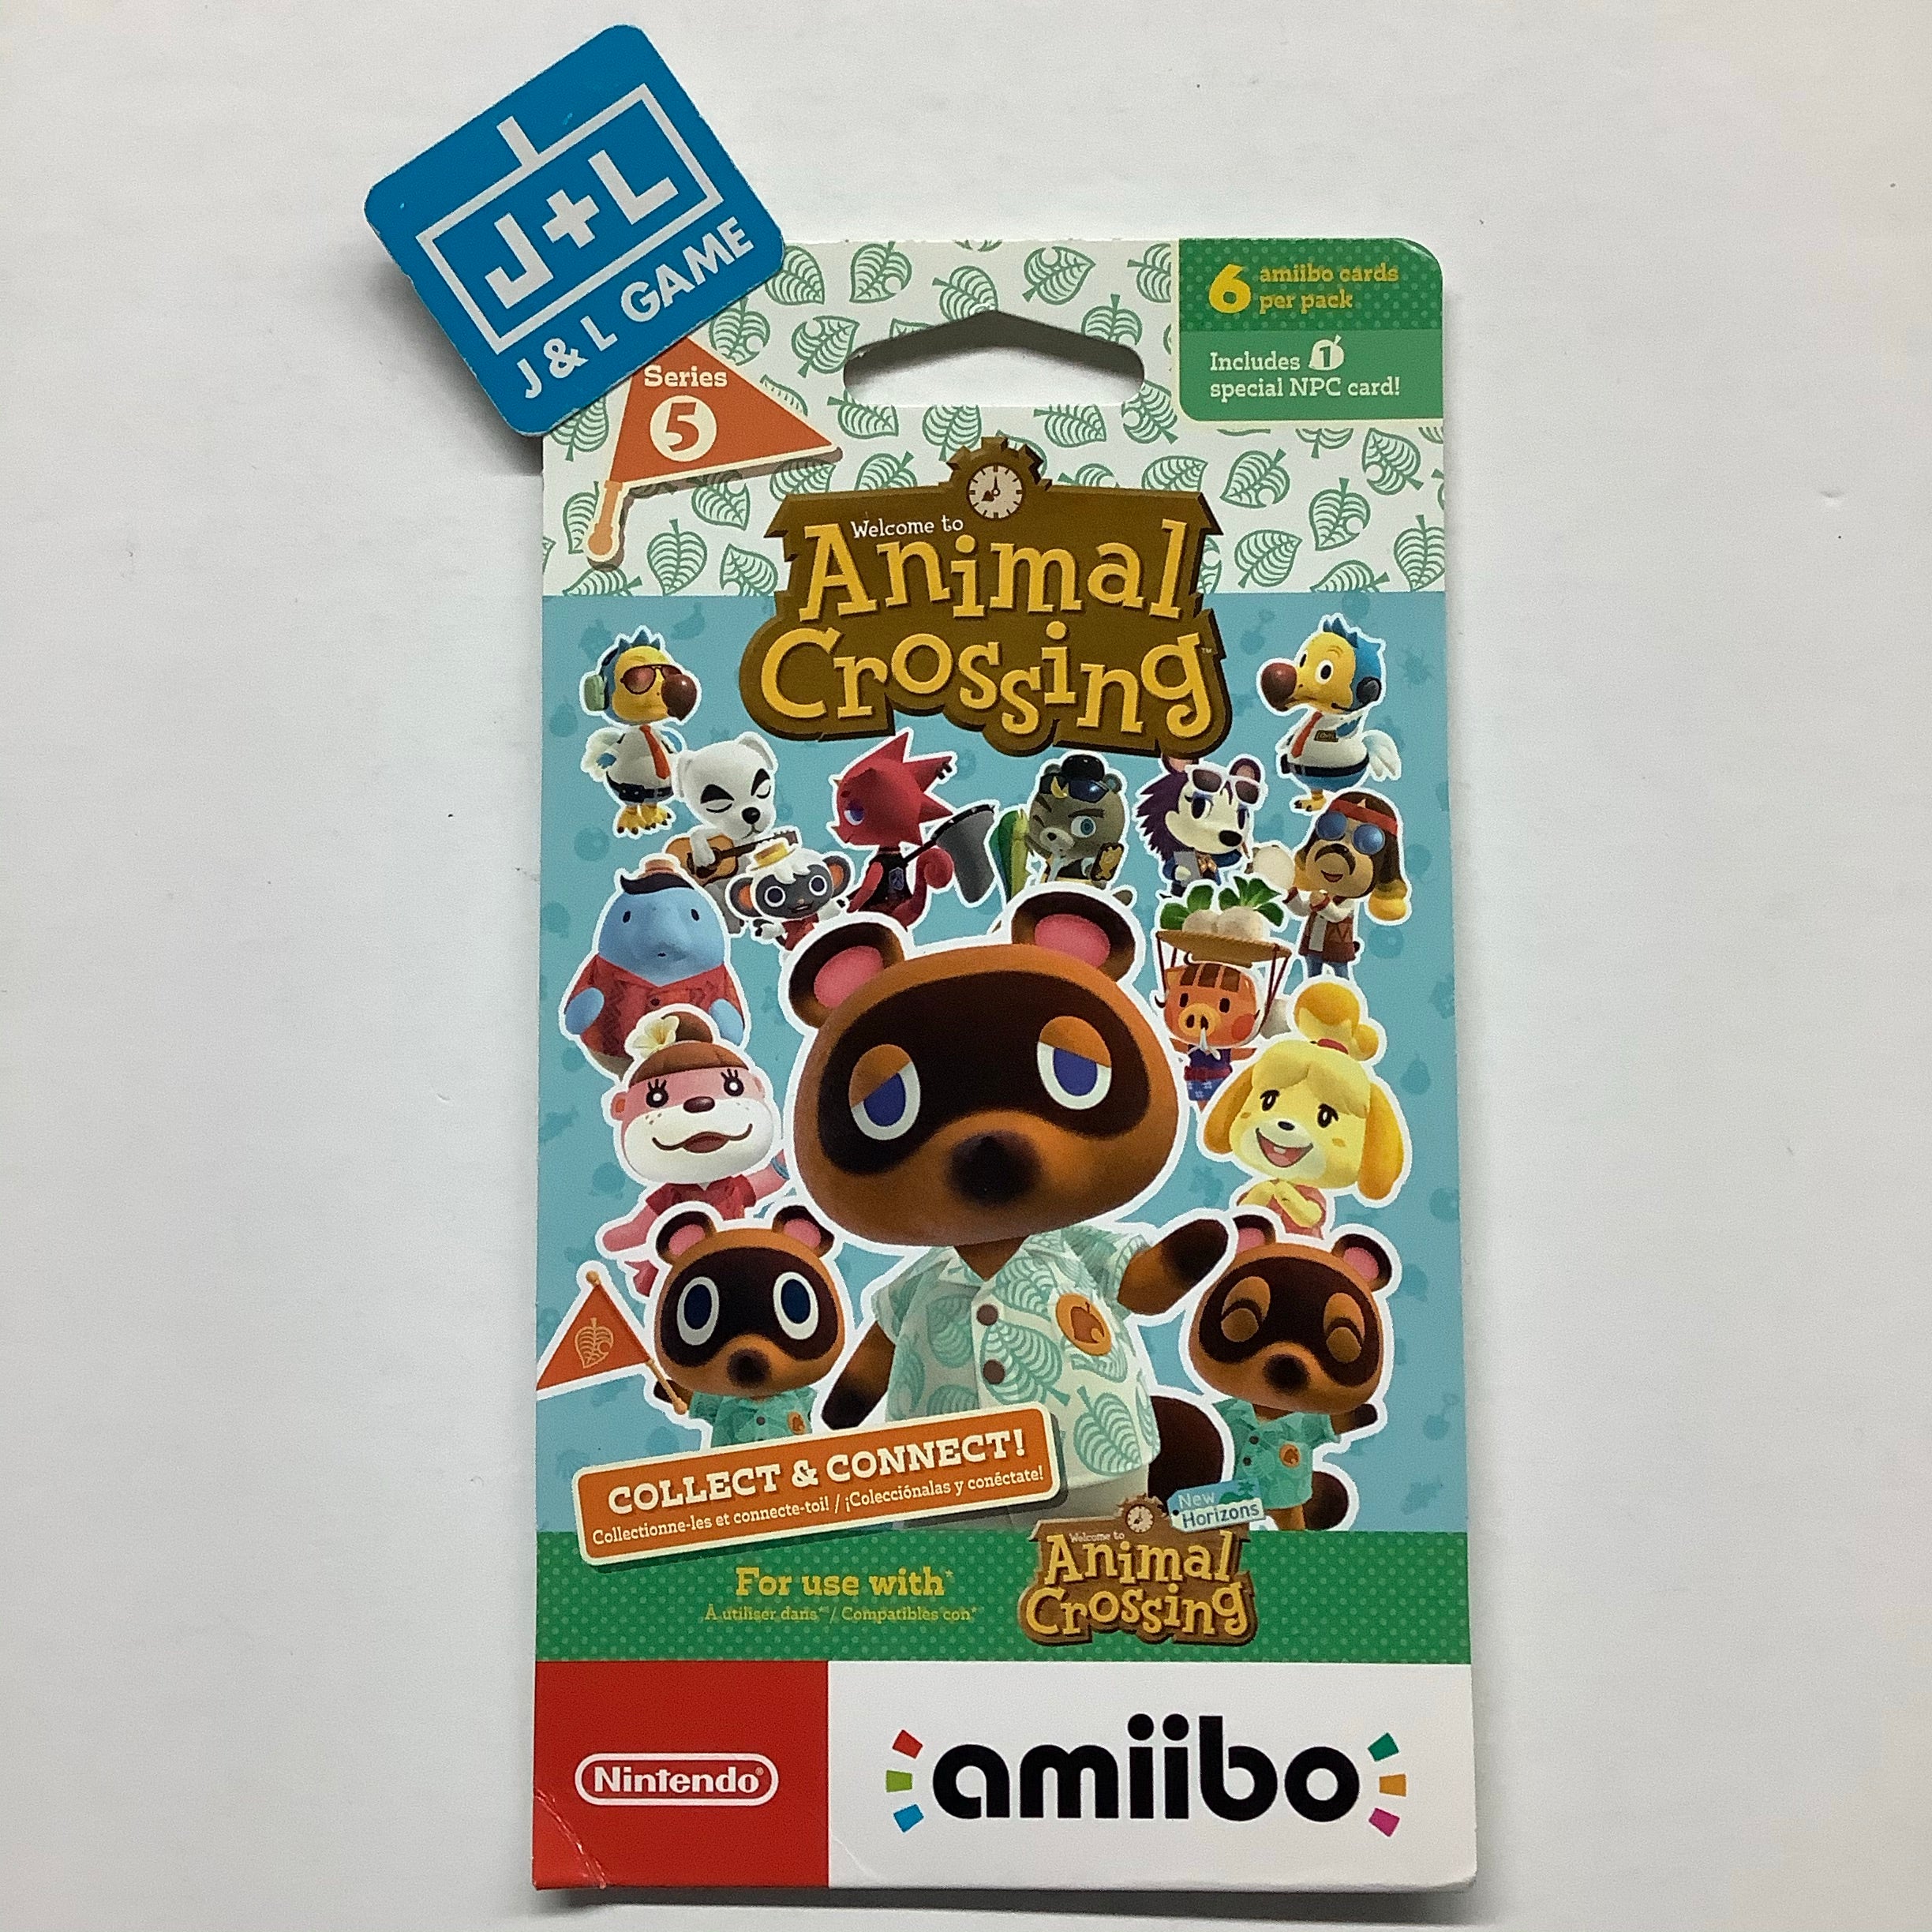 Animal Crossing Cards - Series 5 (Pack of 6 cards) - Nintendo Amiibo Amiibo Nintendo   